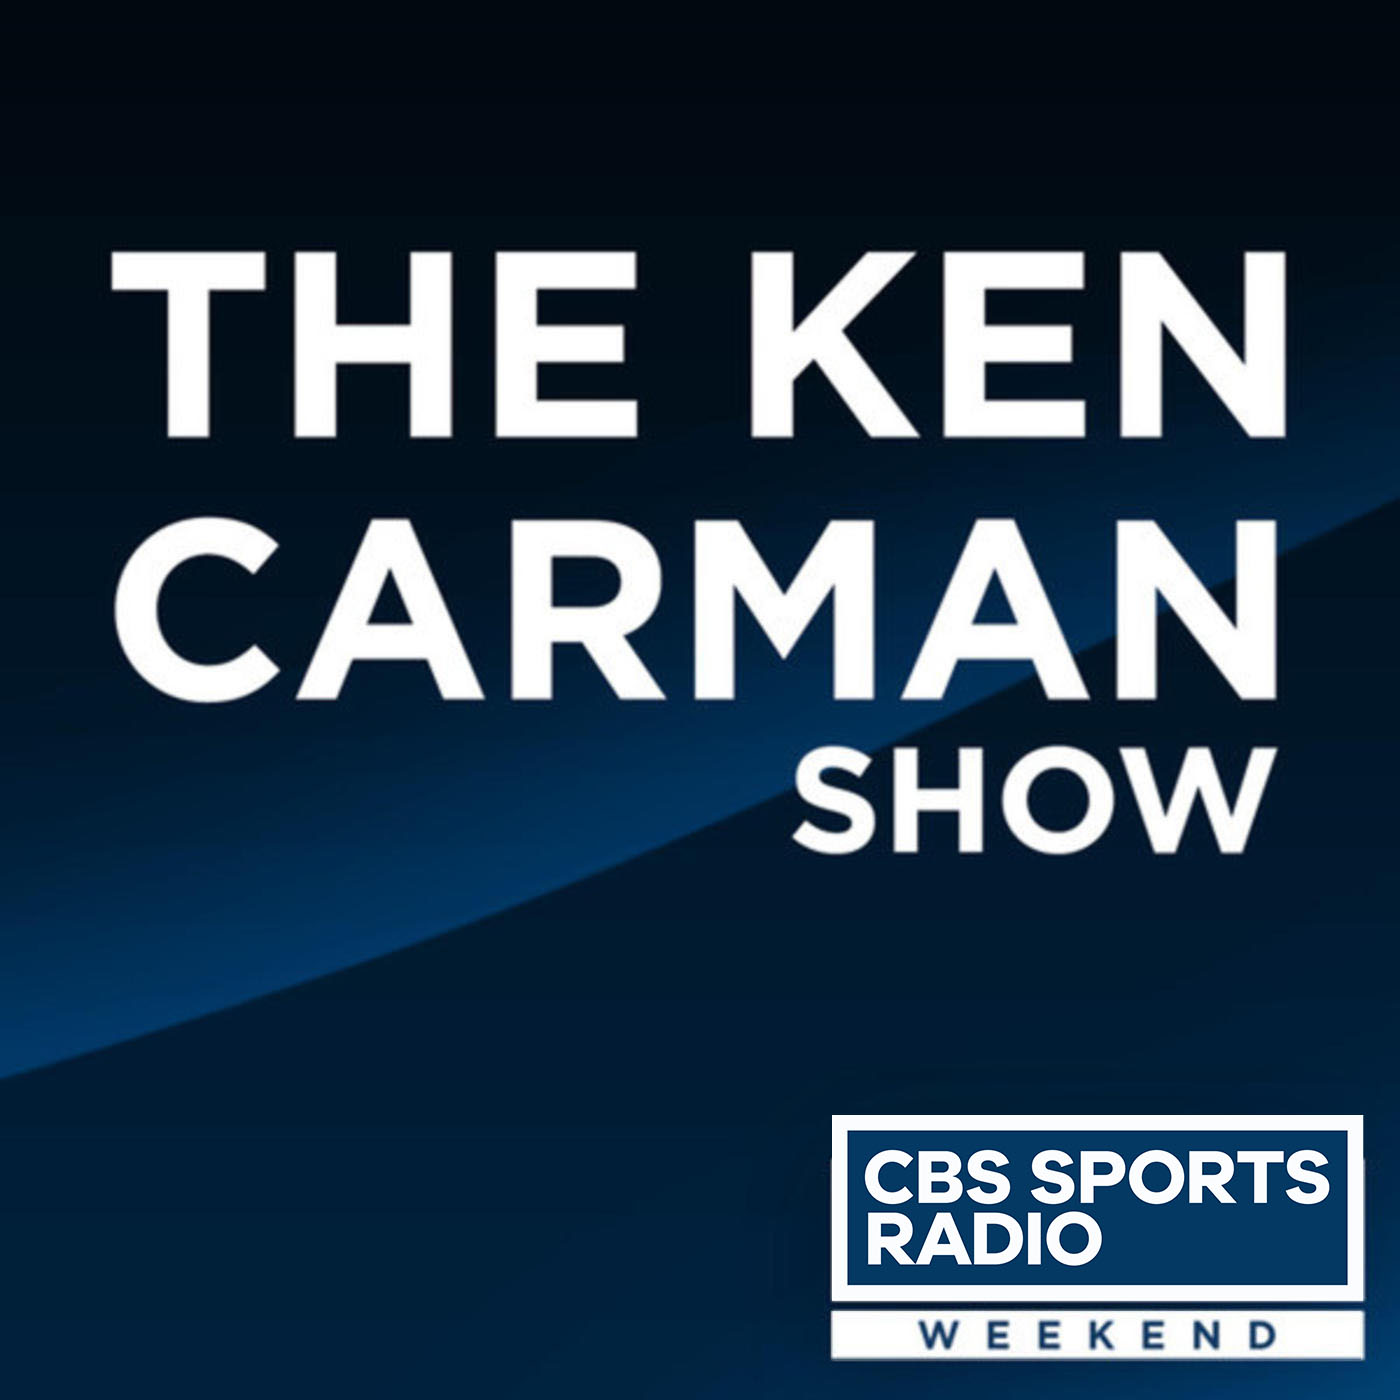 The Ken Carman Show 06-15-19 Sam Amico, AmicoHoops.com